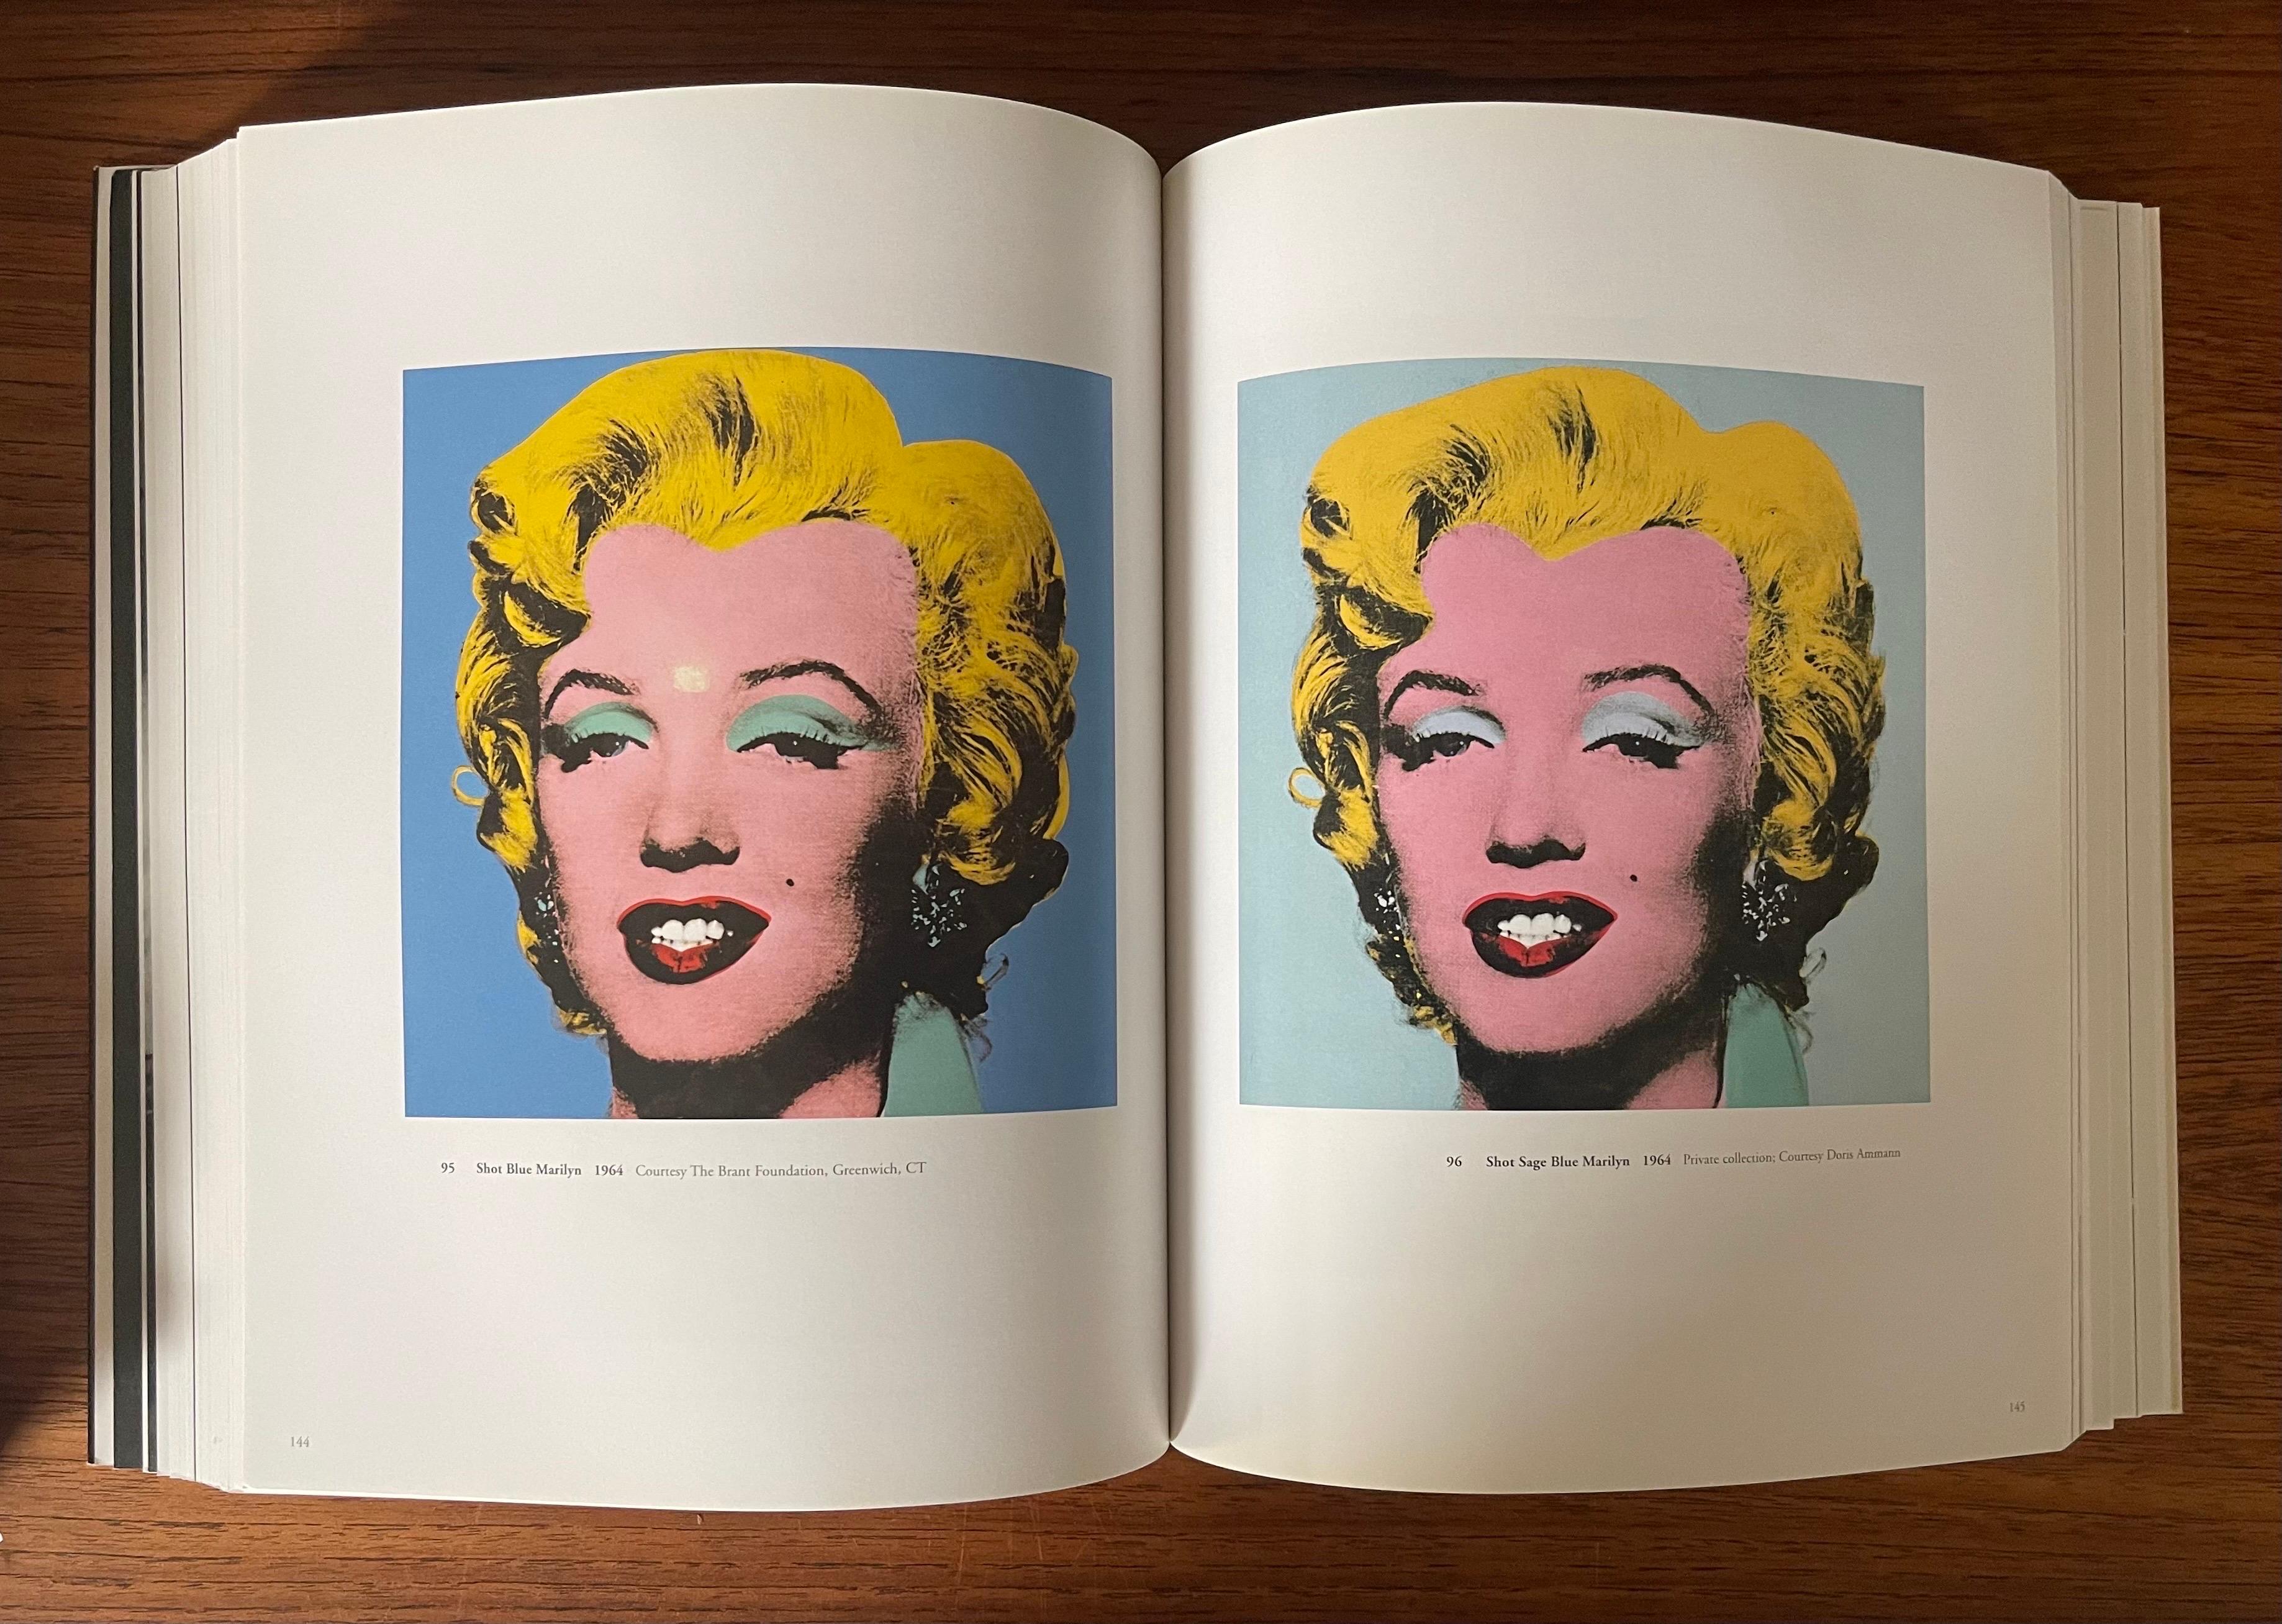 Livres d'art rétrospectifs et programmes d'expositions Moca LA 2002 de Warhol en vente 1